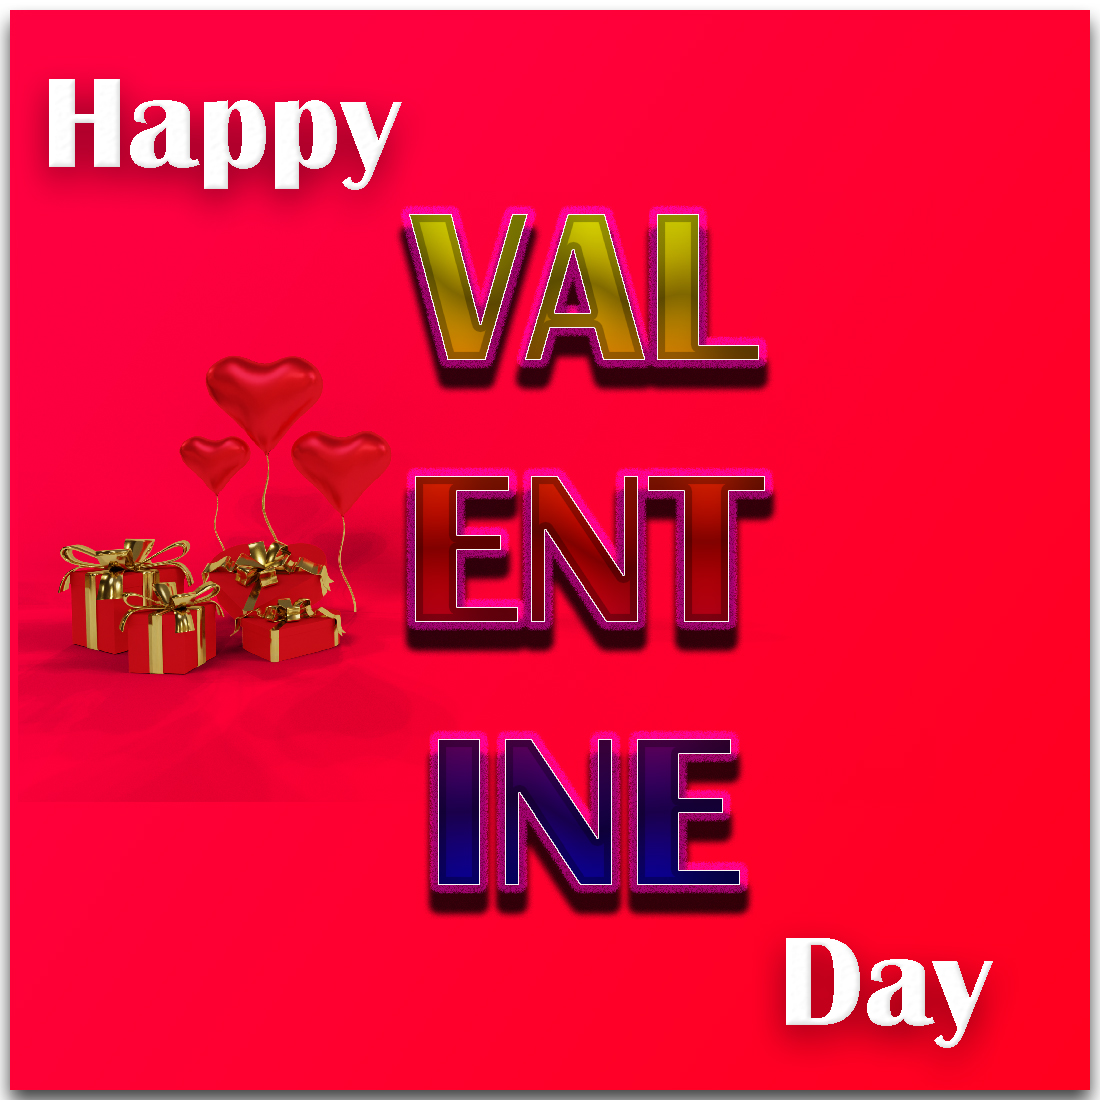 14 Feb international valentine Day preview image.